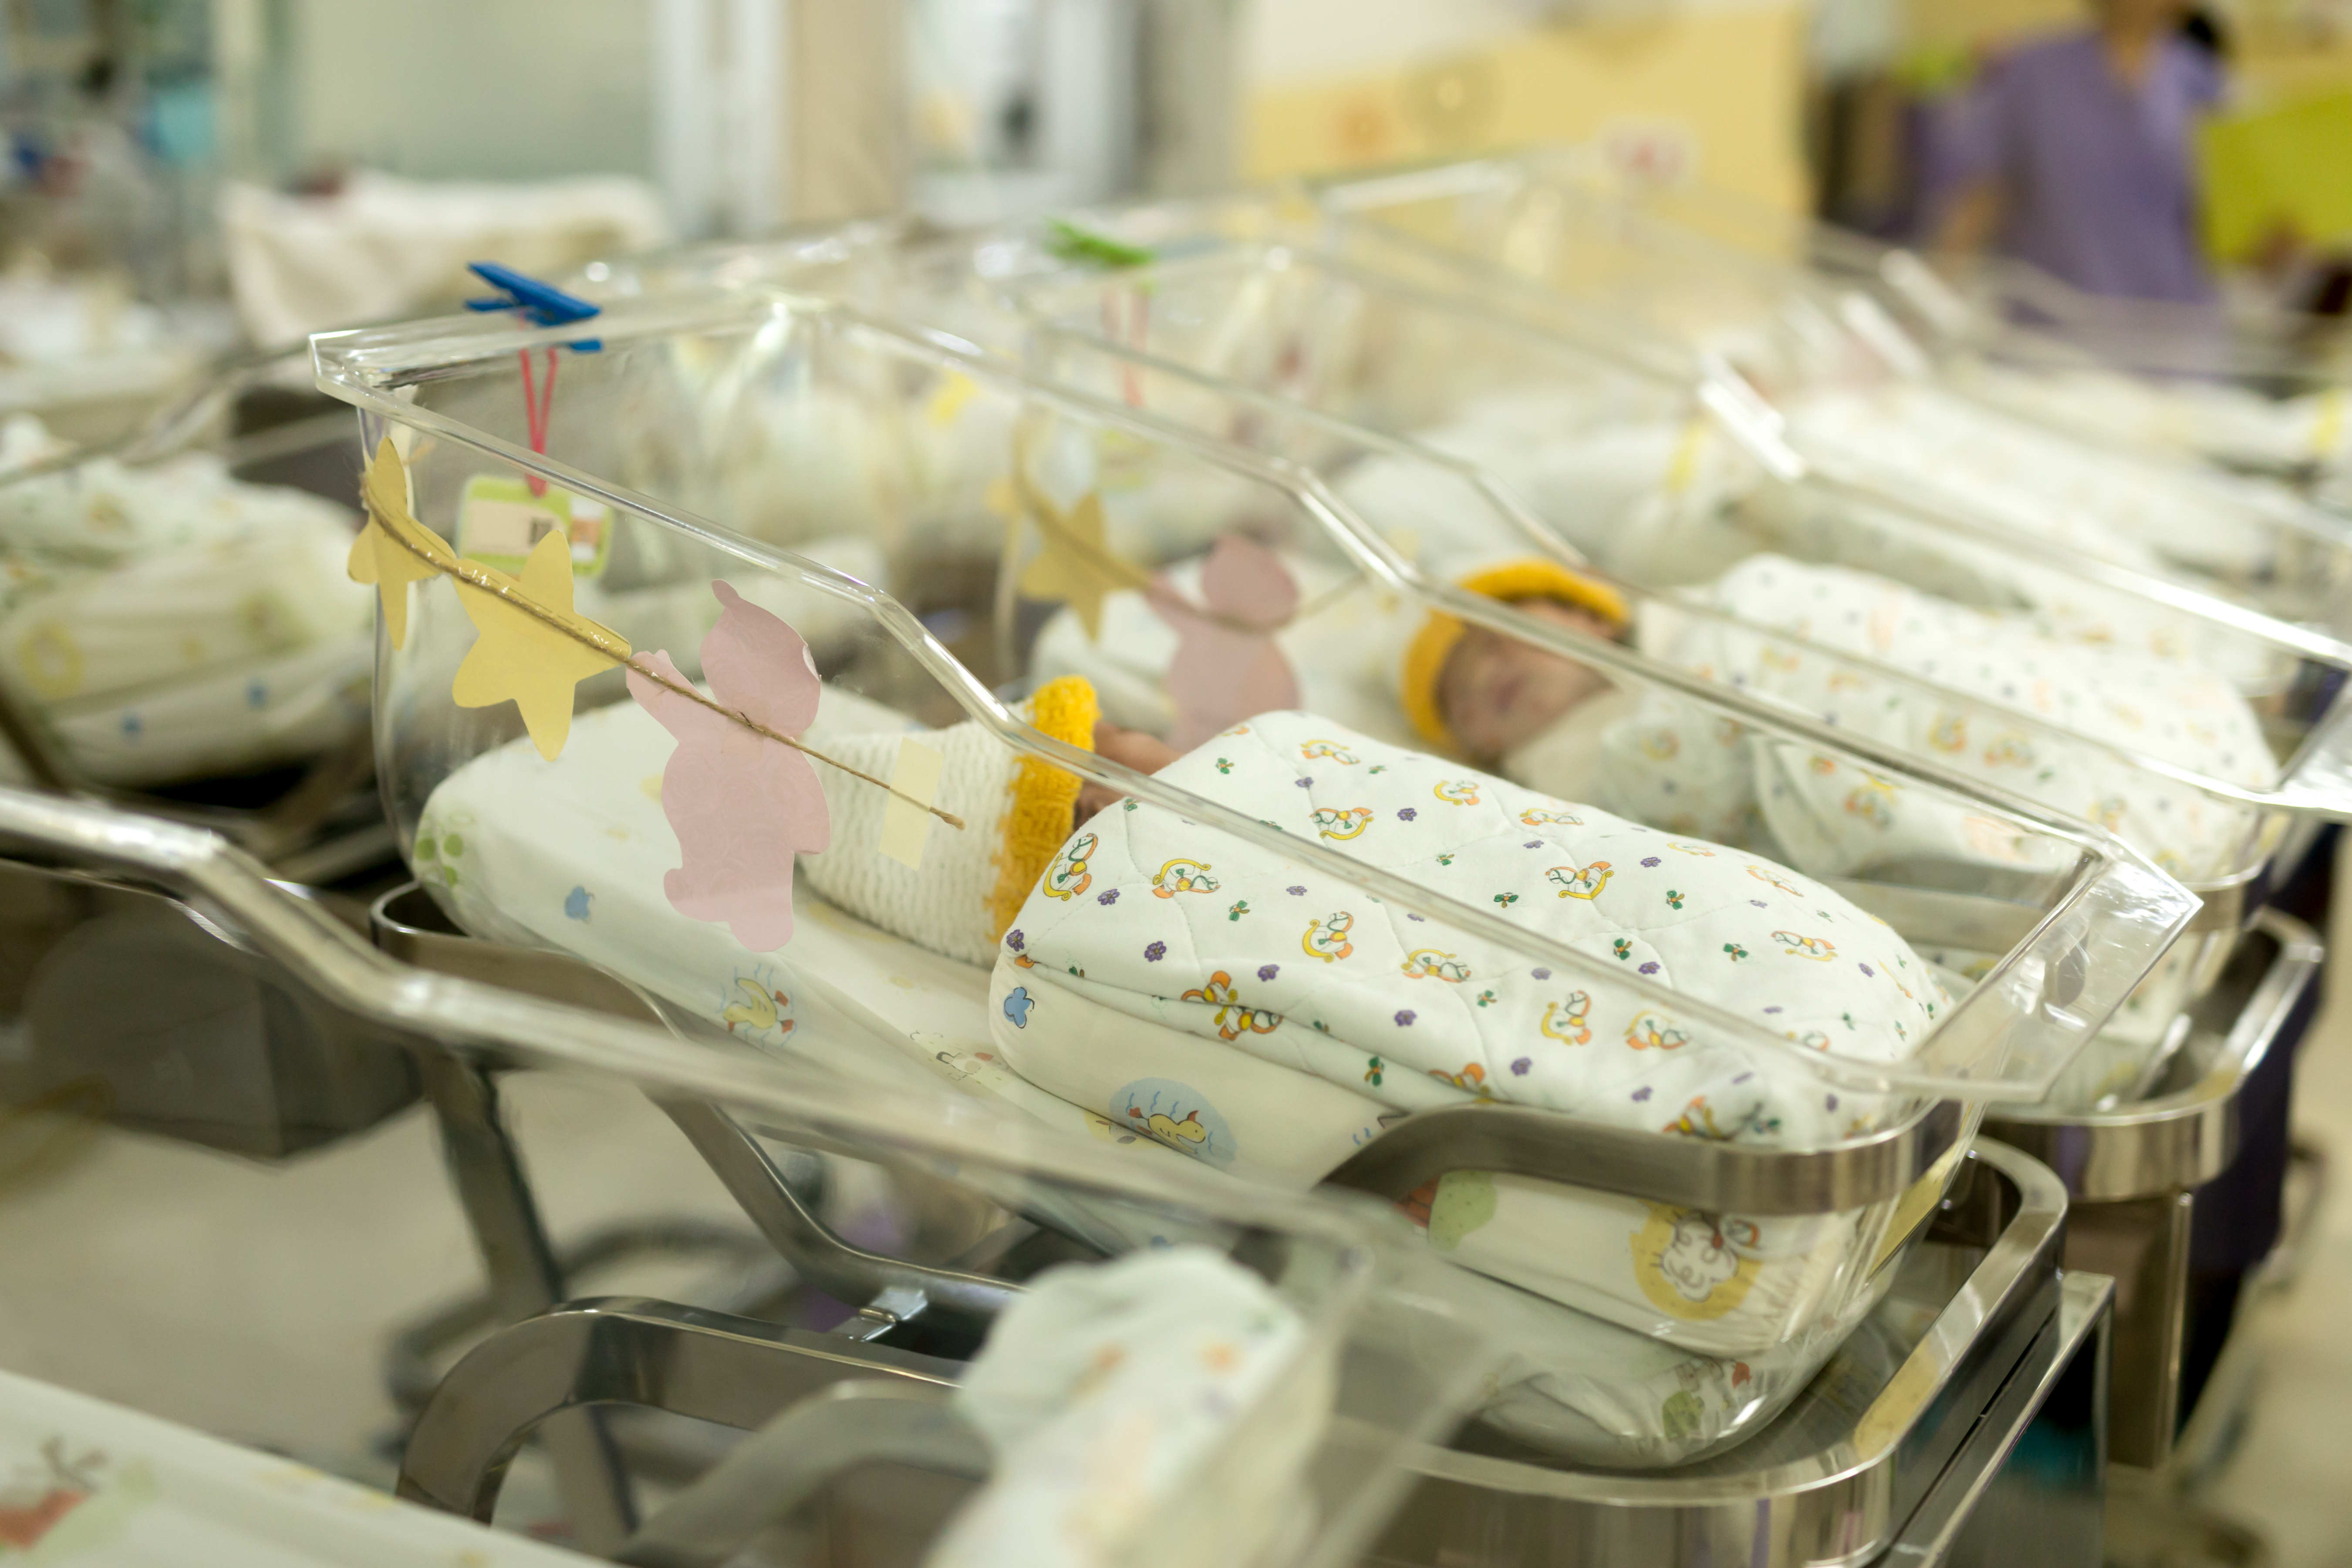 Babies in a hospital | Source: Shutterstock